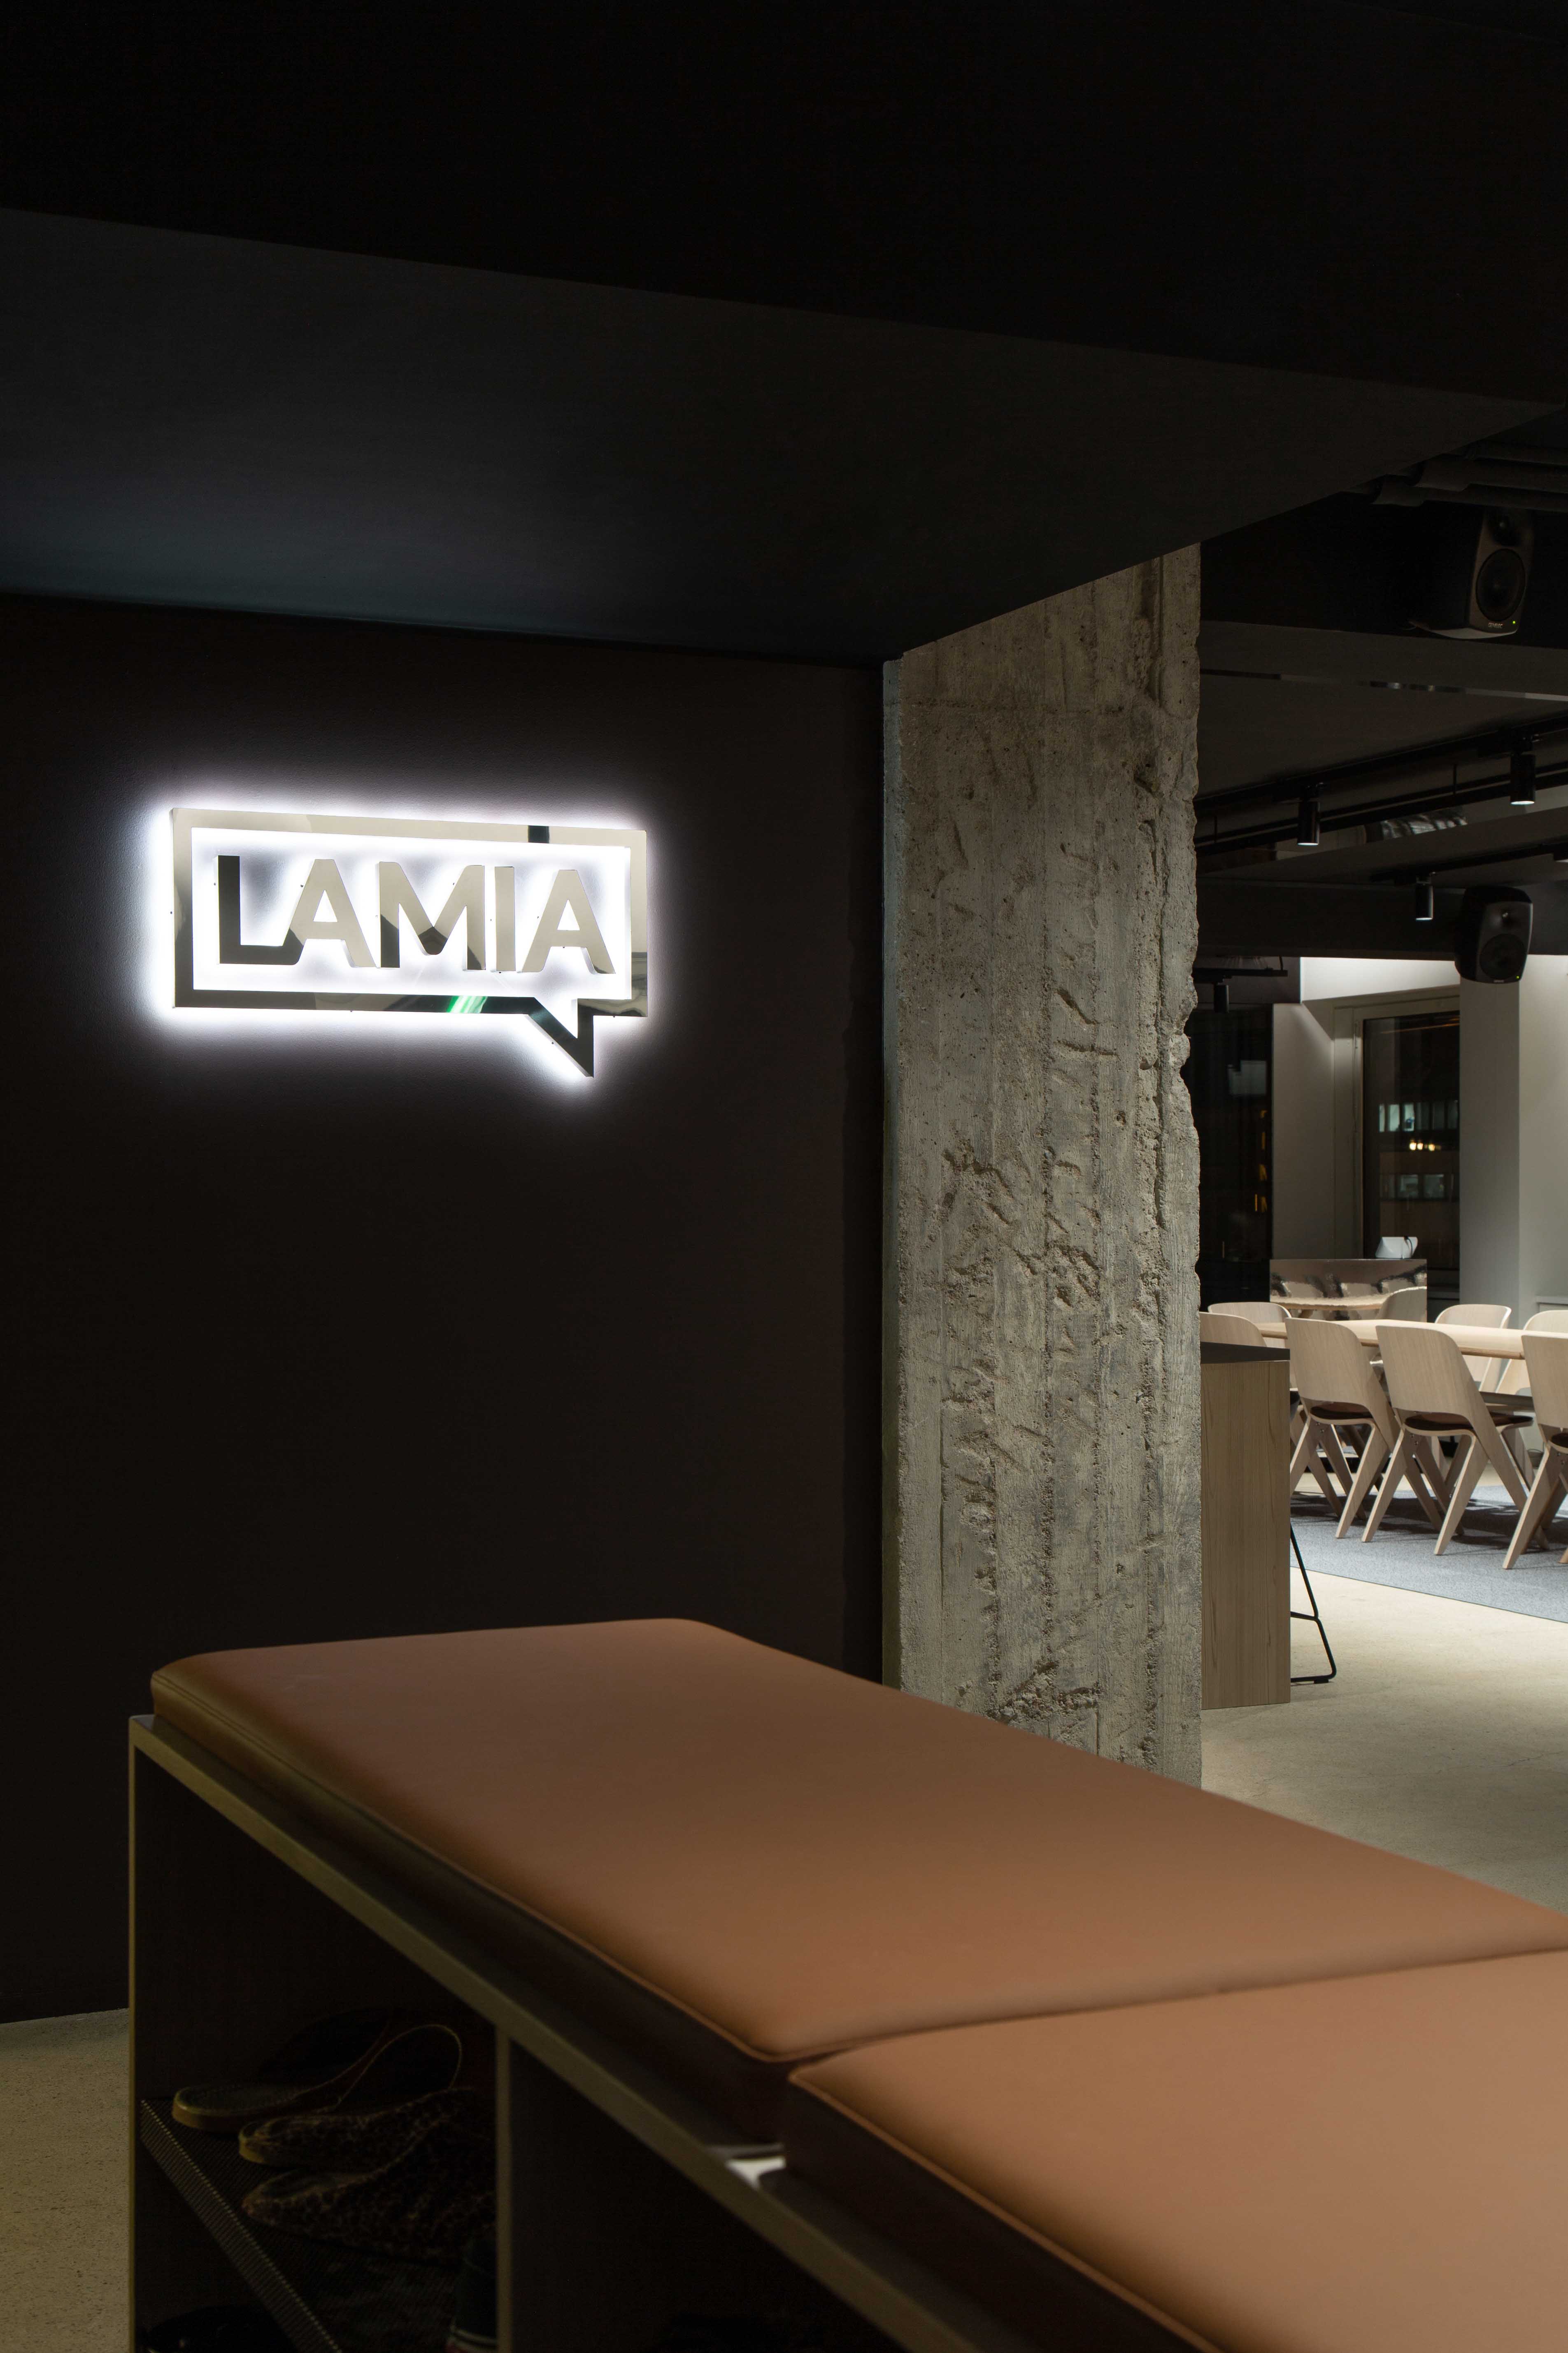 Lamia office entrance logo